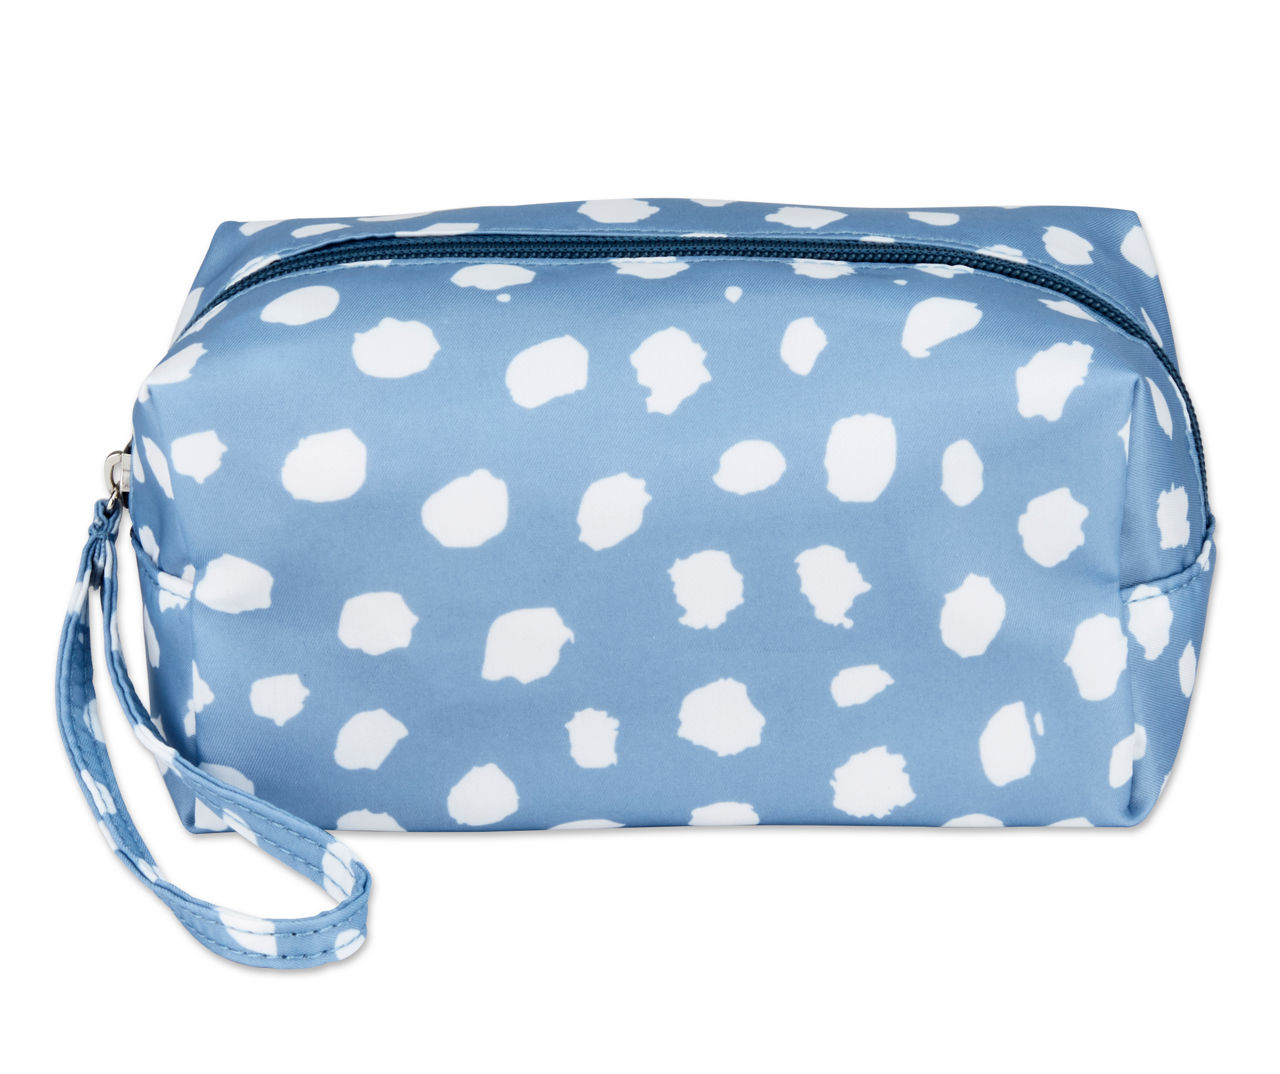 Modella Blue Dot Wristlet Cosmetic Bag | Big Lots